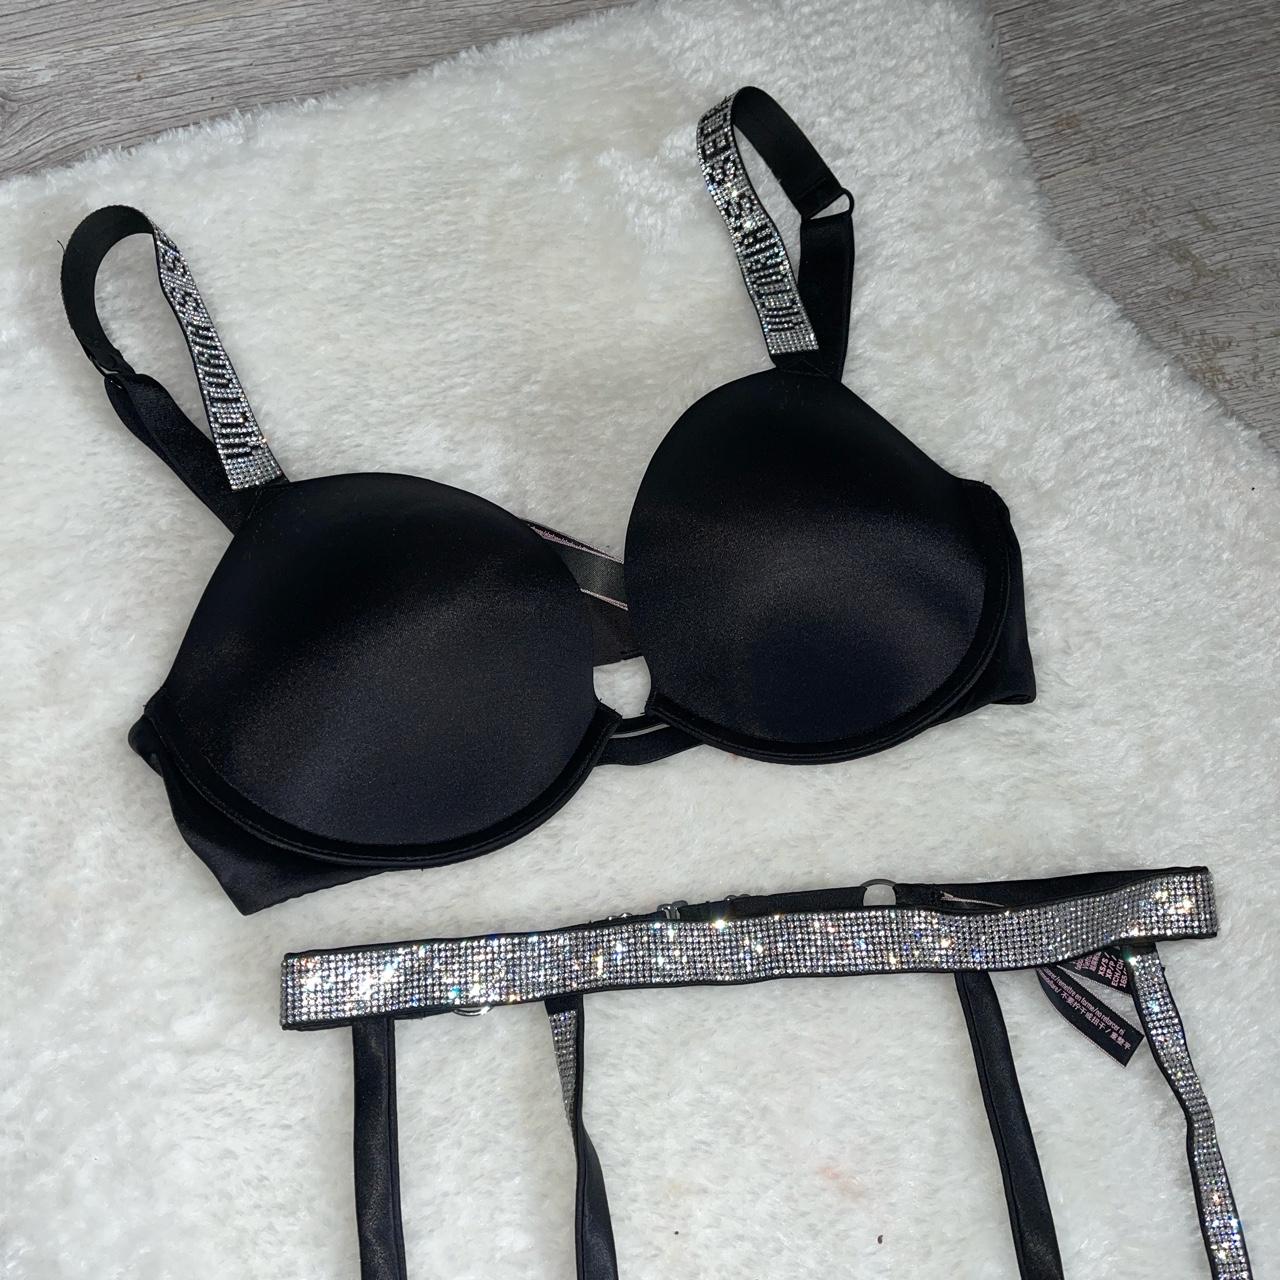 Selling Victoria’s Secret diamond bra and suspended